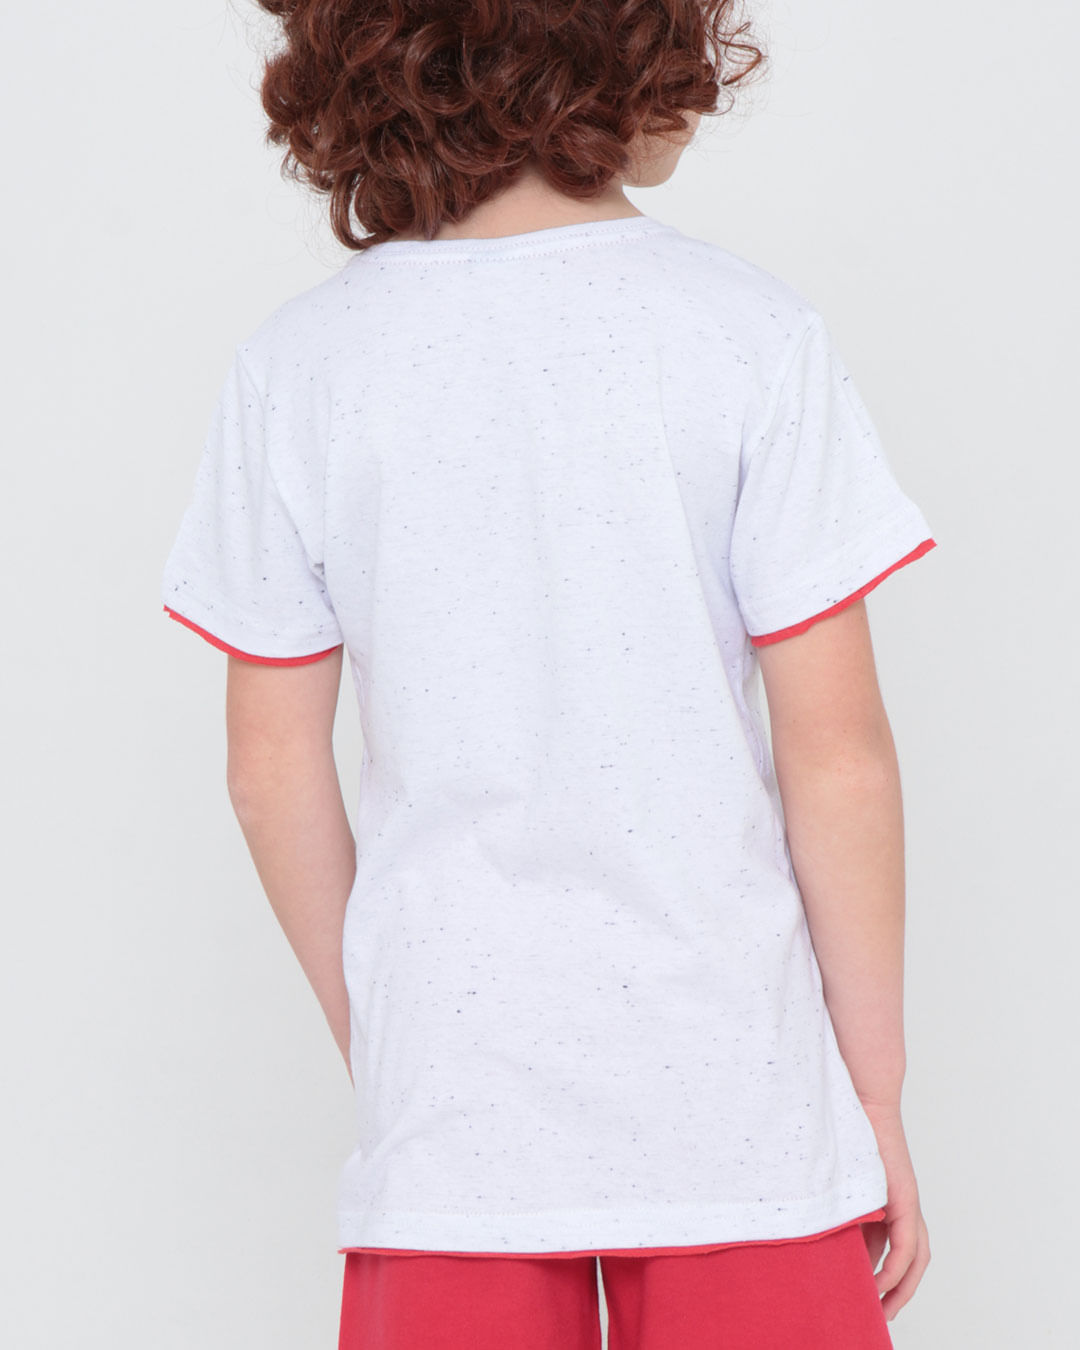 Camiseta-Infantil-Recortes-Sport-Botone-Branca